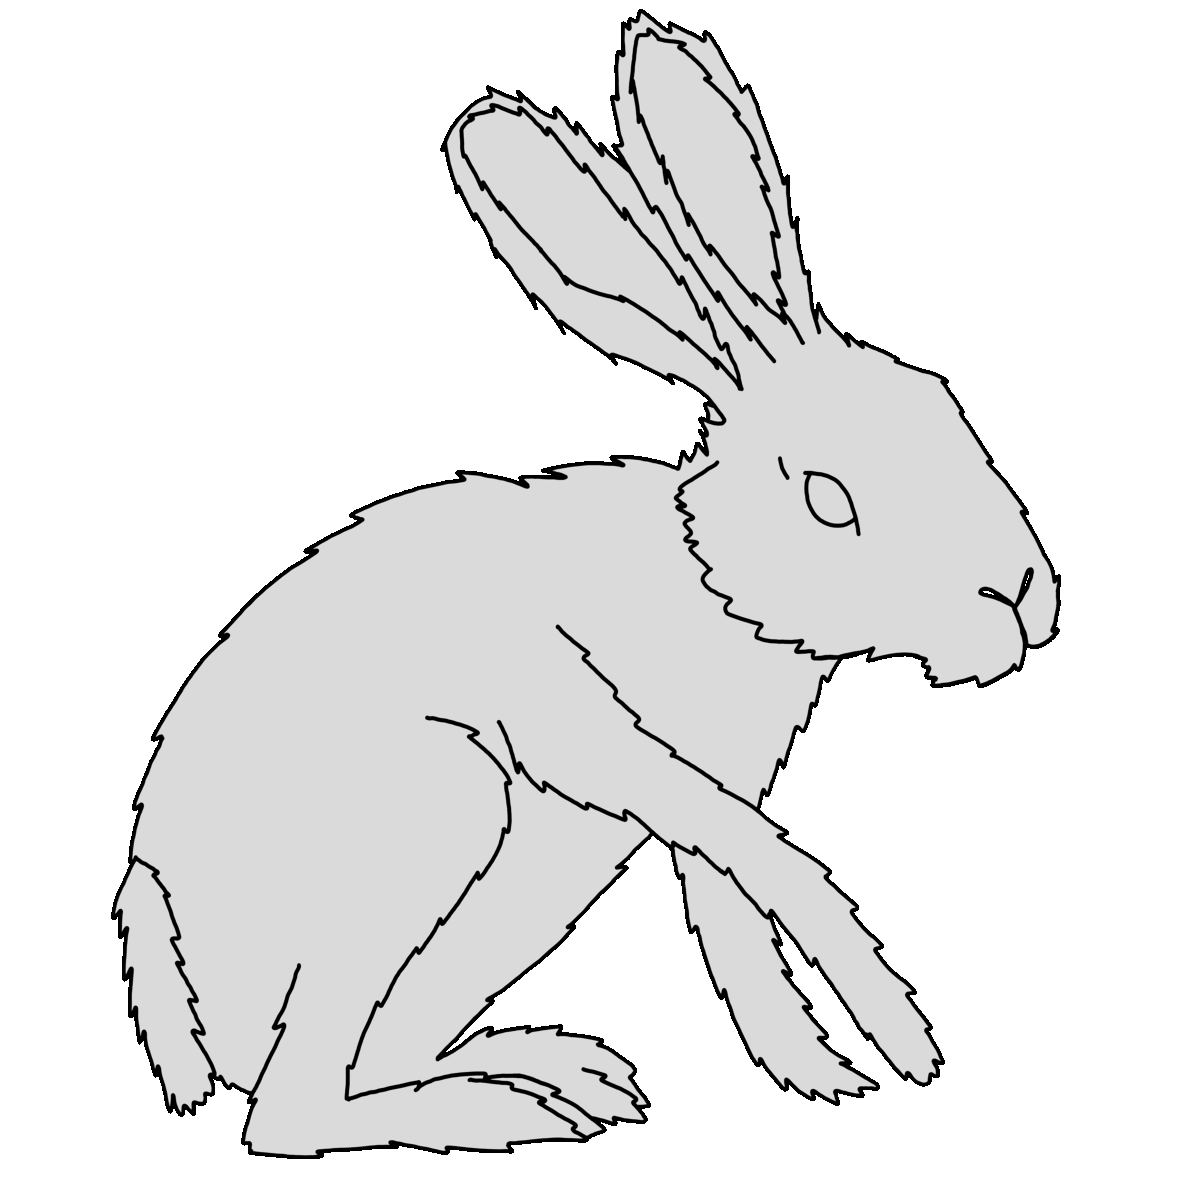 An animate white rabbit